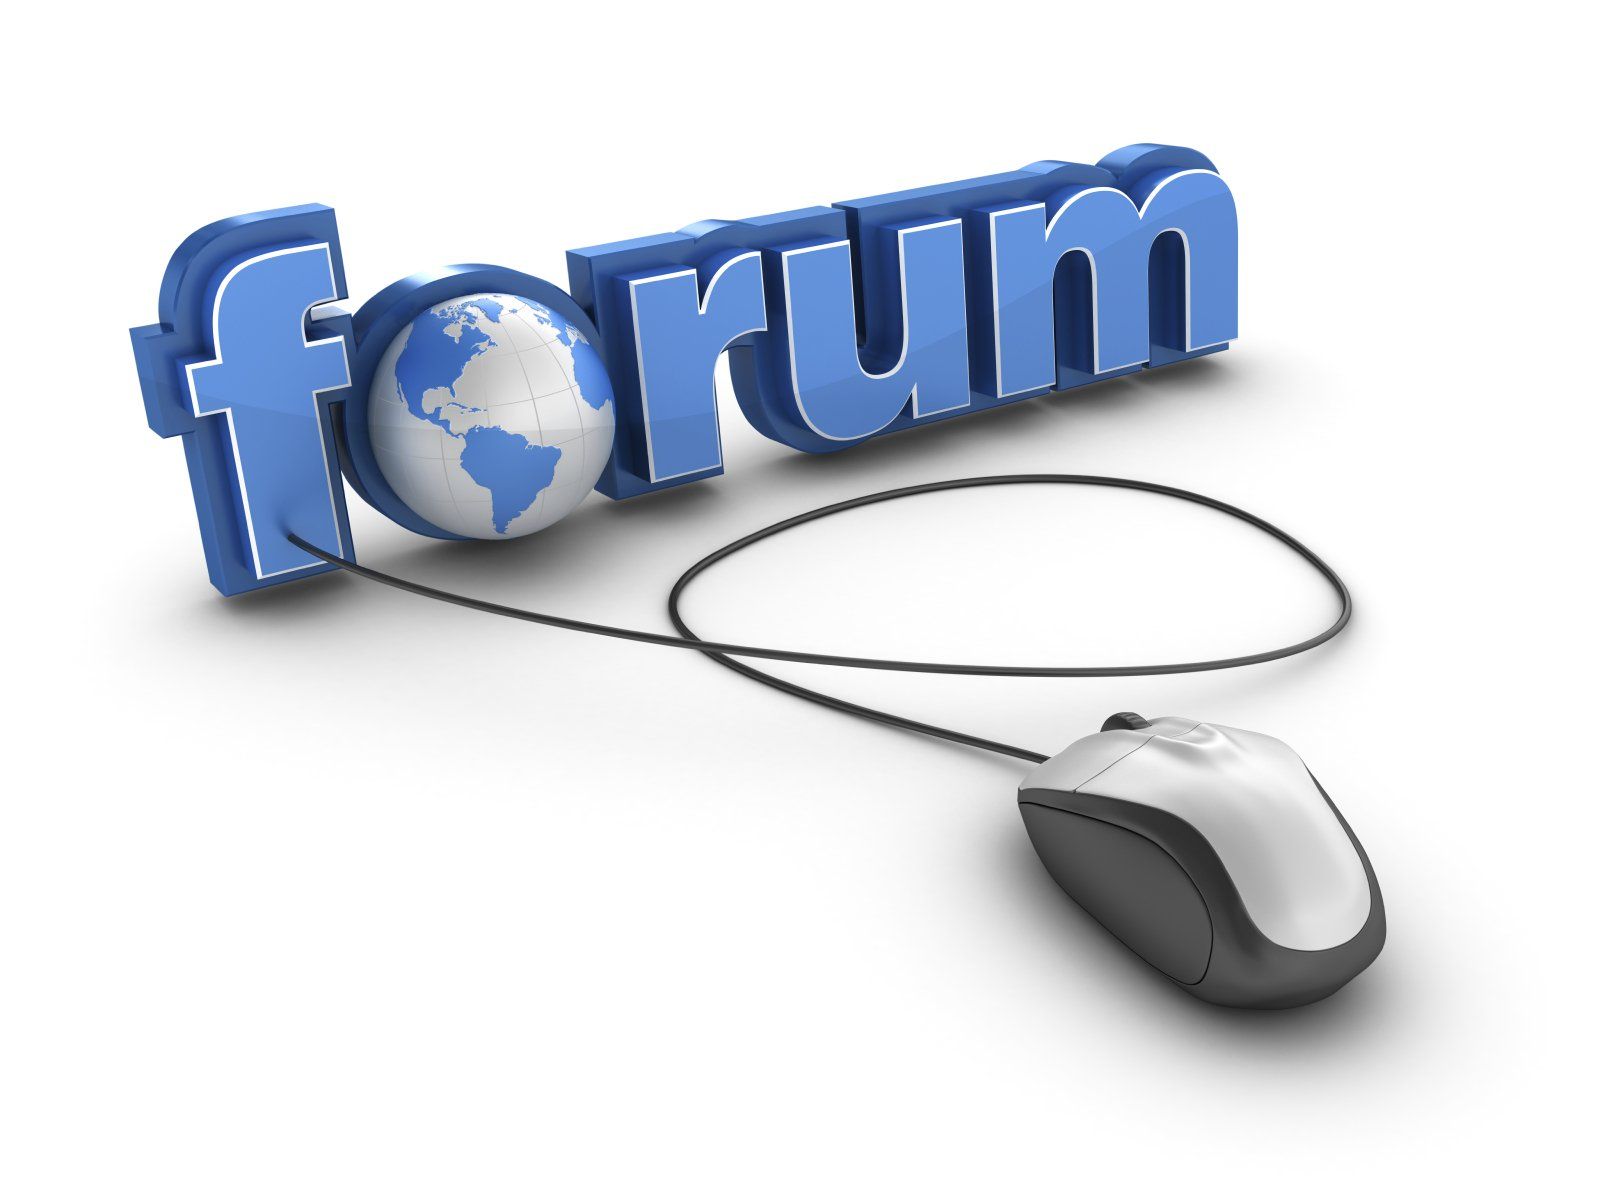 Forum posting ru. Интернет форум. Веб форум. Блоги и форумы. Веб форум картинки.